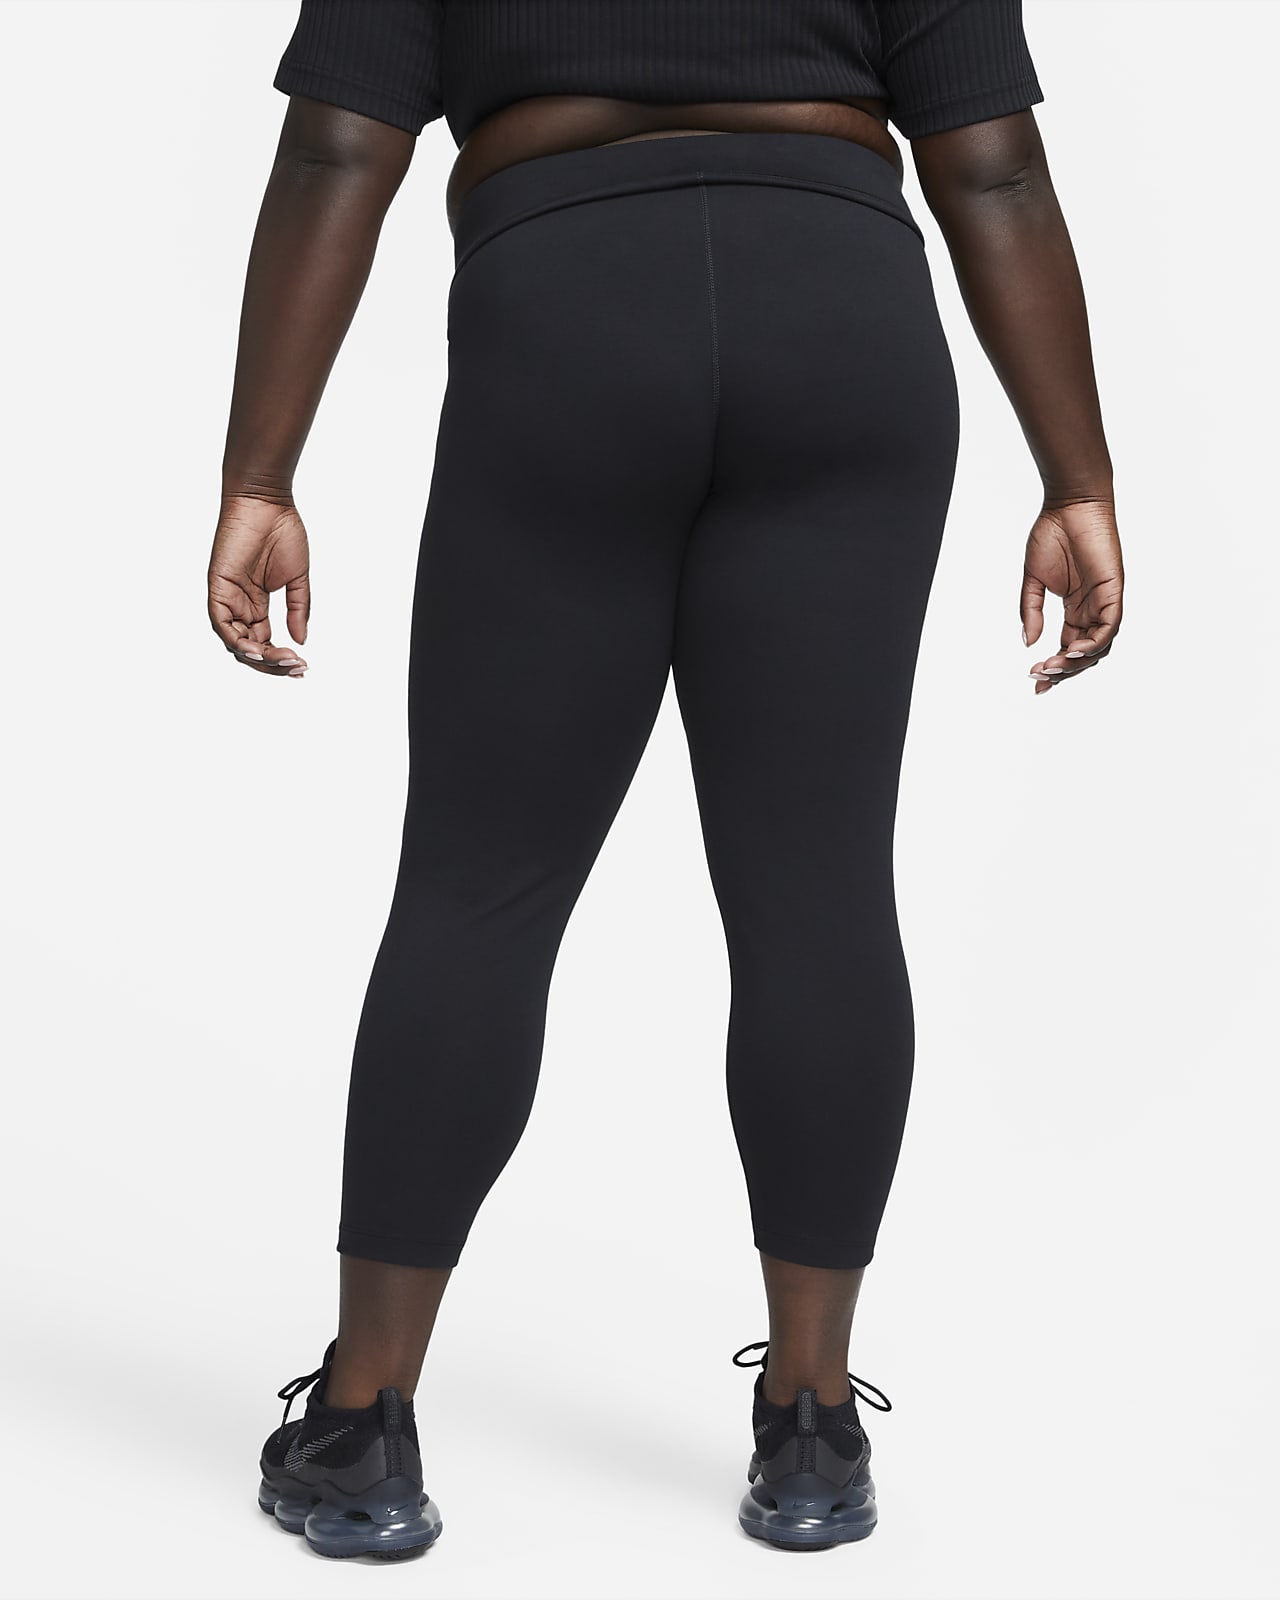 Nike One Women's High-Rise Leggings (Plus Size). Nike LU